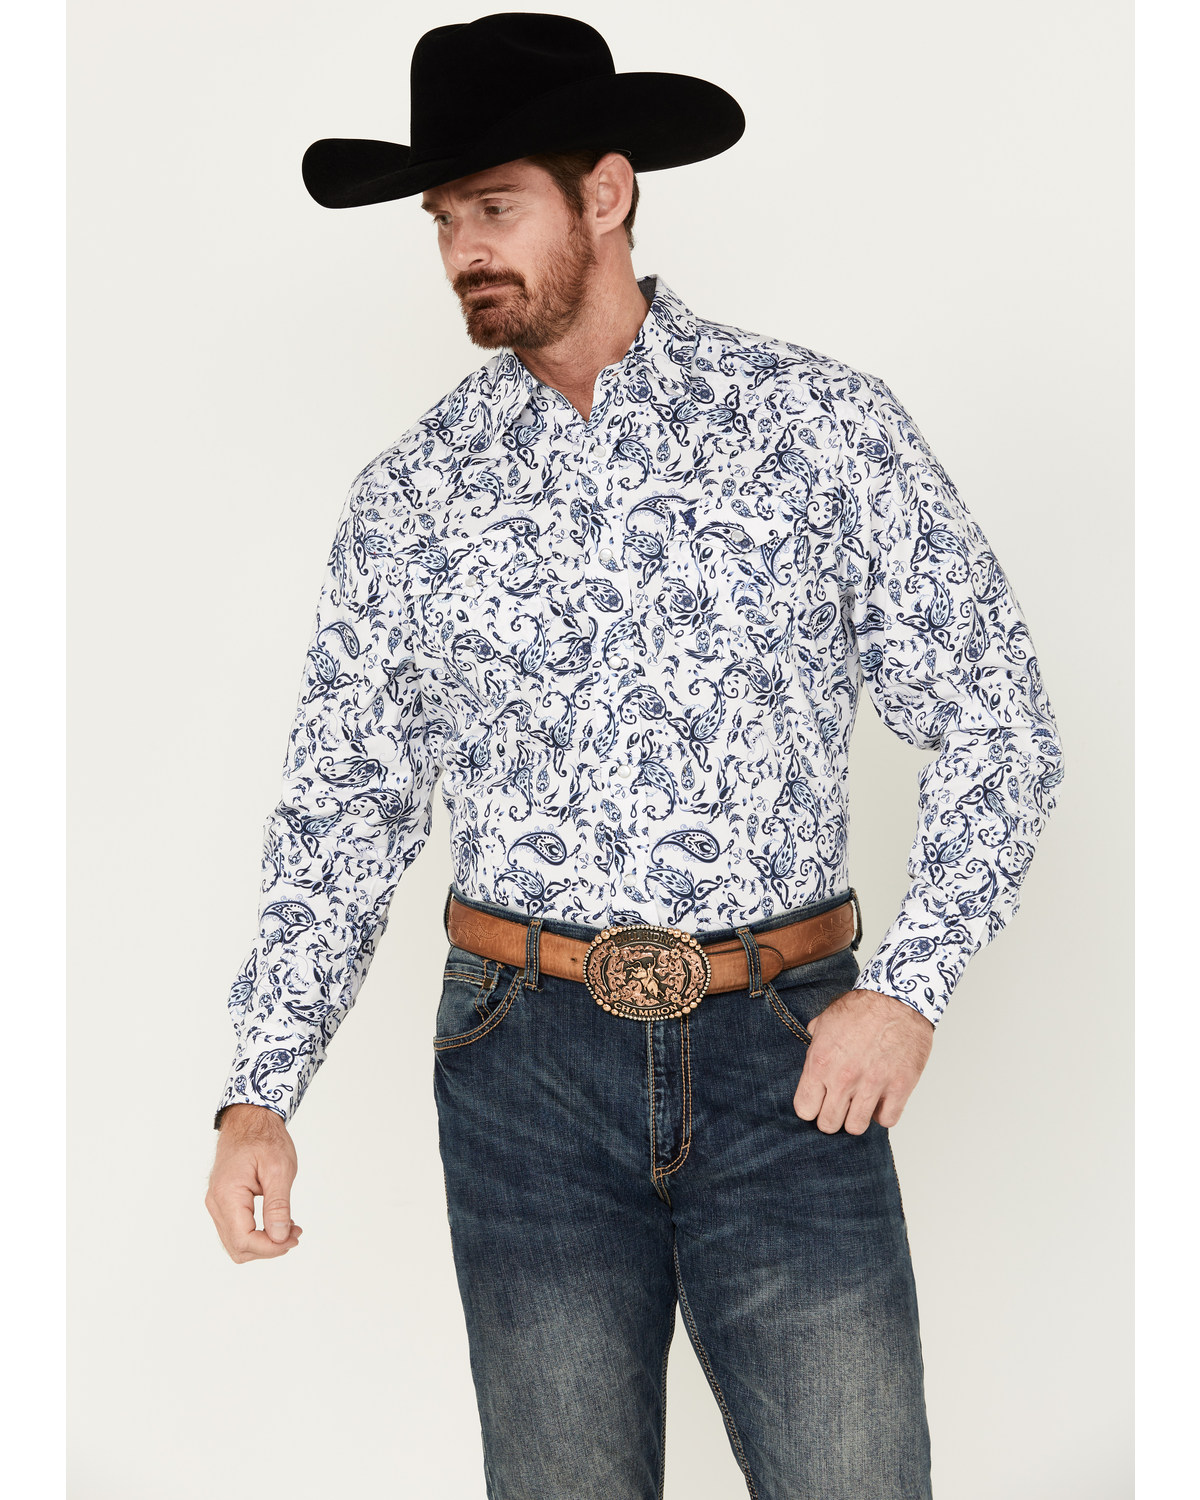 Rodeo Clothing Men's Floral Paisley Print Long Sleeve Pearl Snap Western Shirt